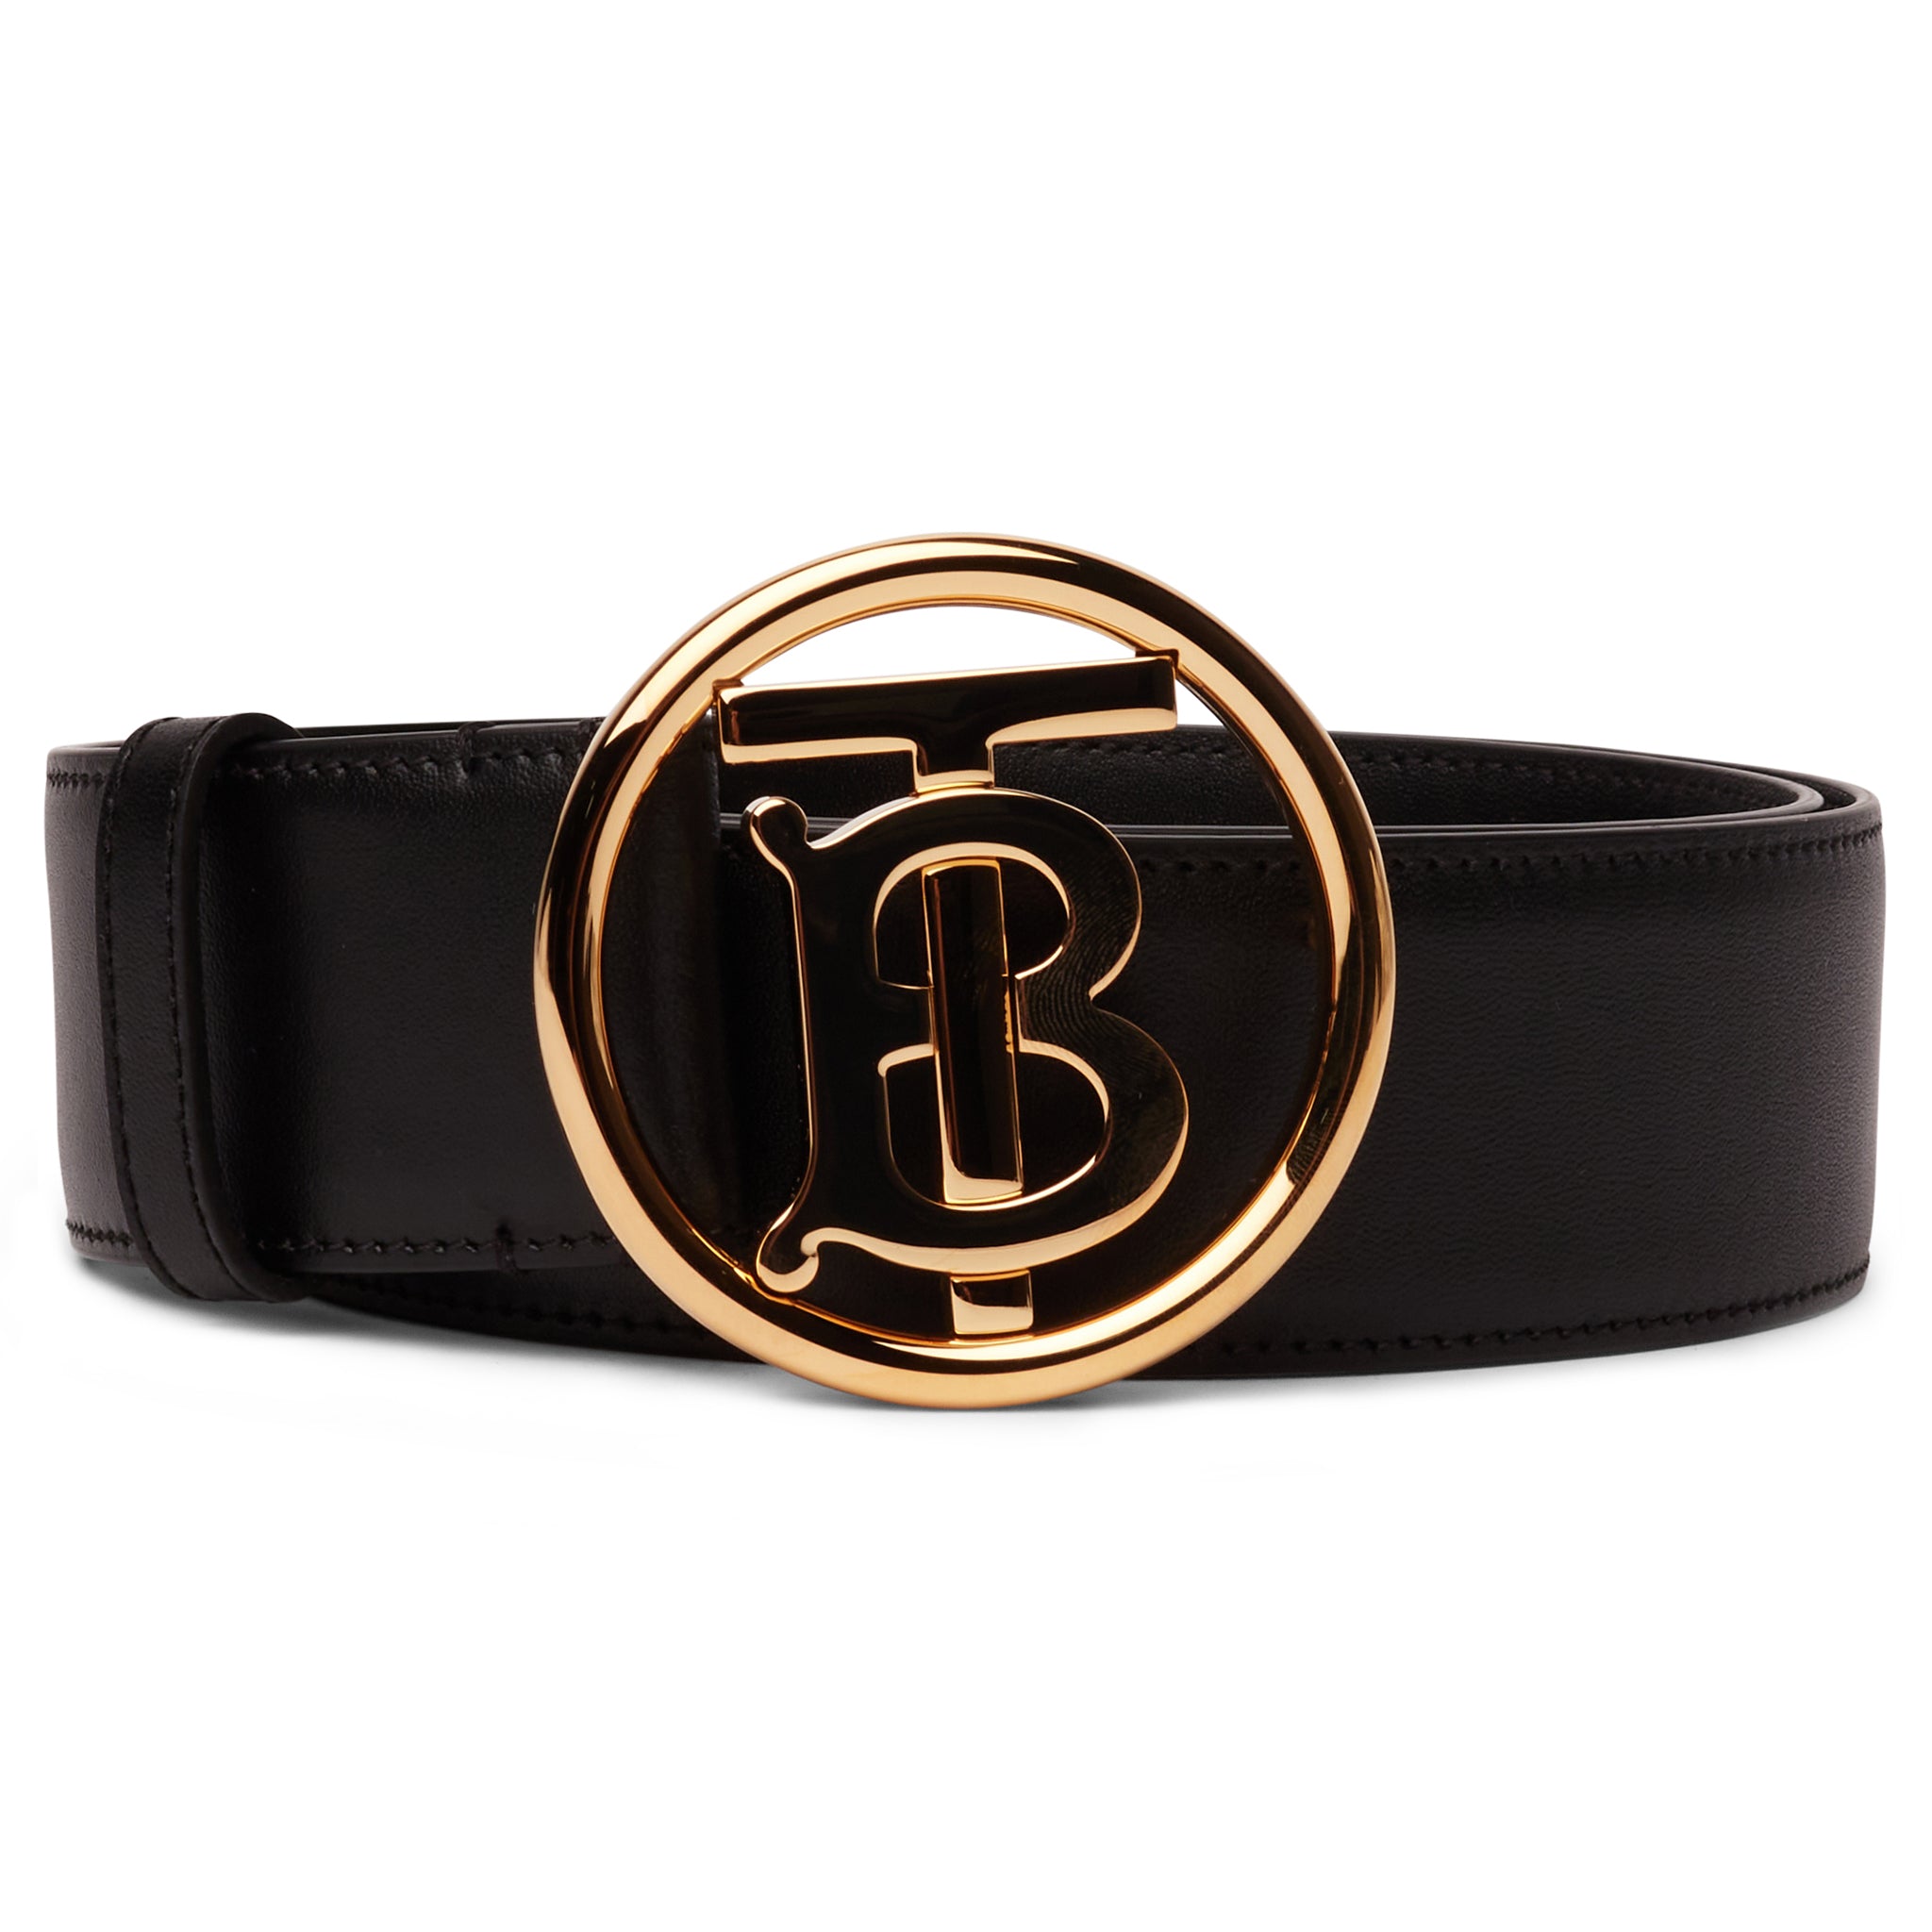 Burberry London Brown Leather Women's Waist Belt Gold Buckle USA Size 36